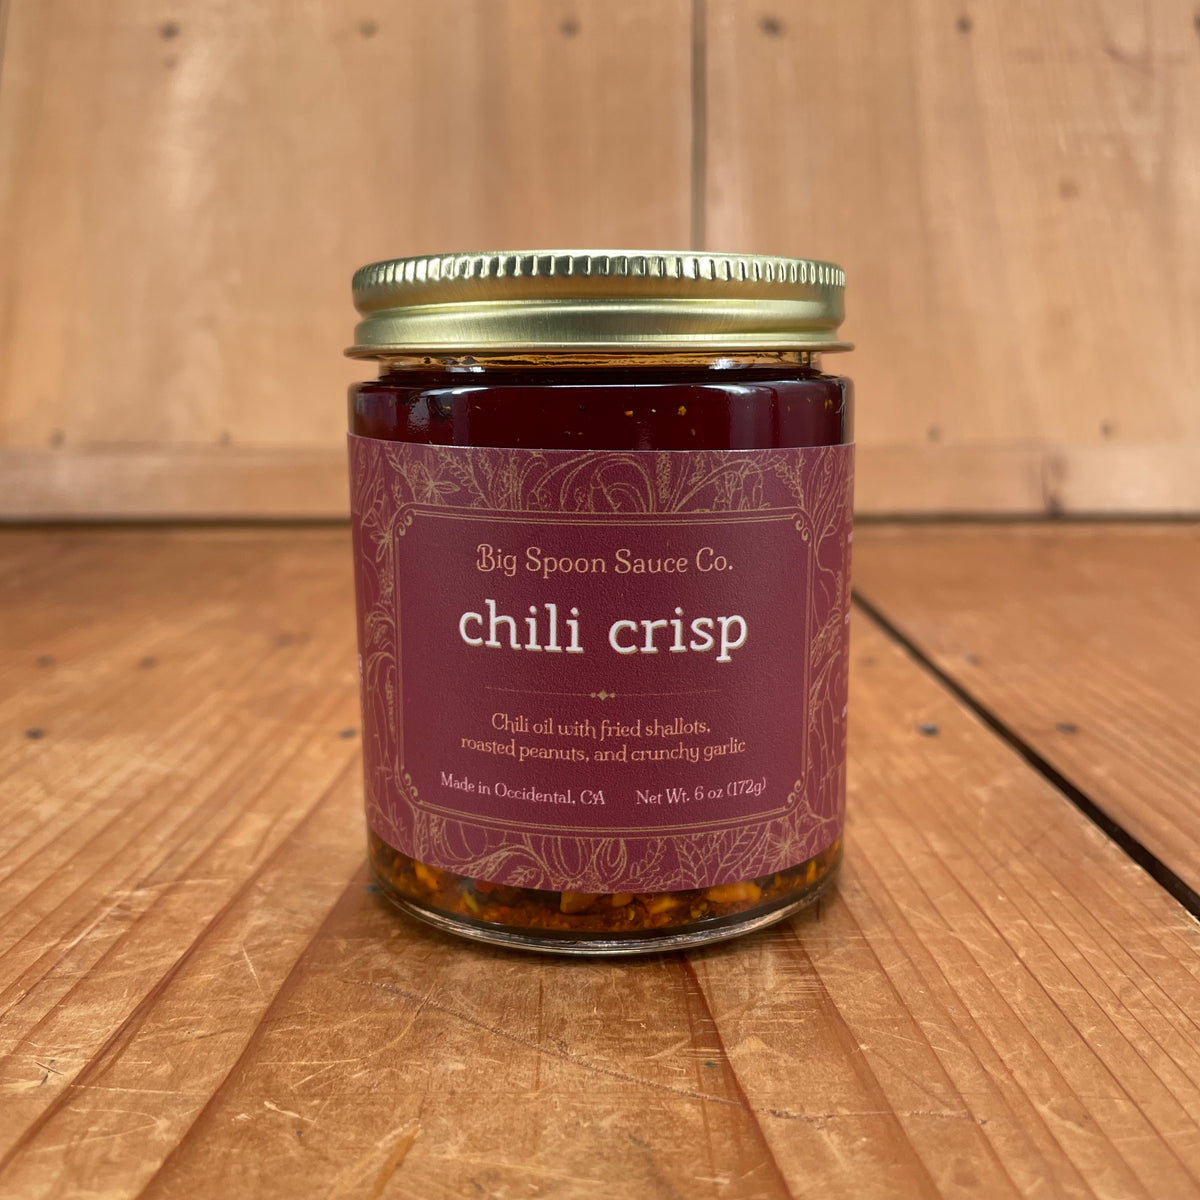 Big Spoon Sauce Co. Chili Crisp